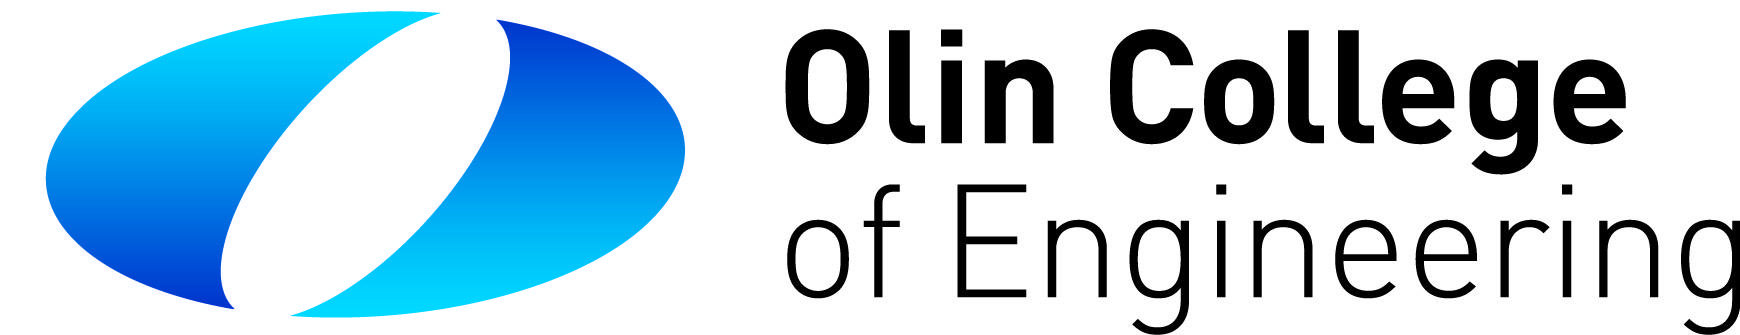 Olin College of Engineering logo